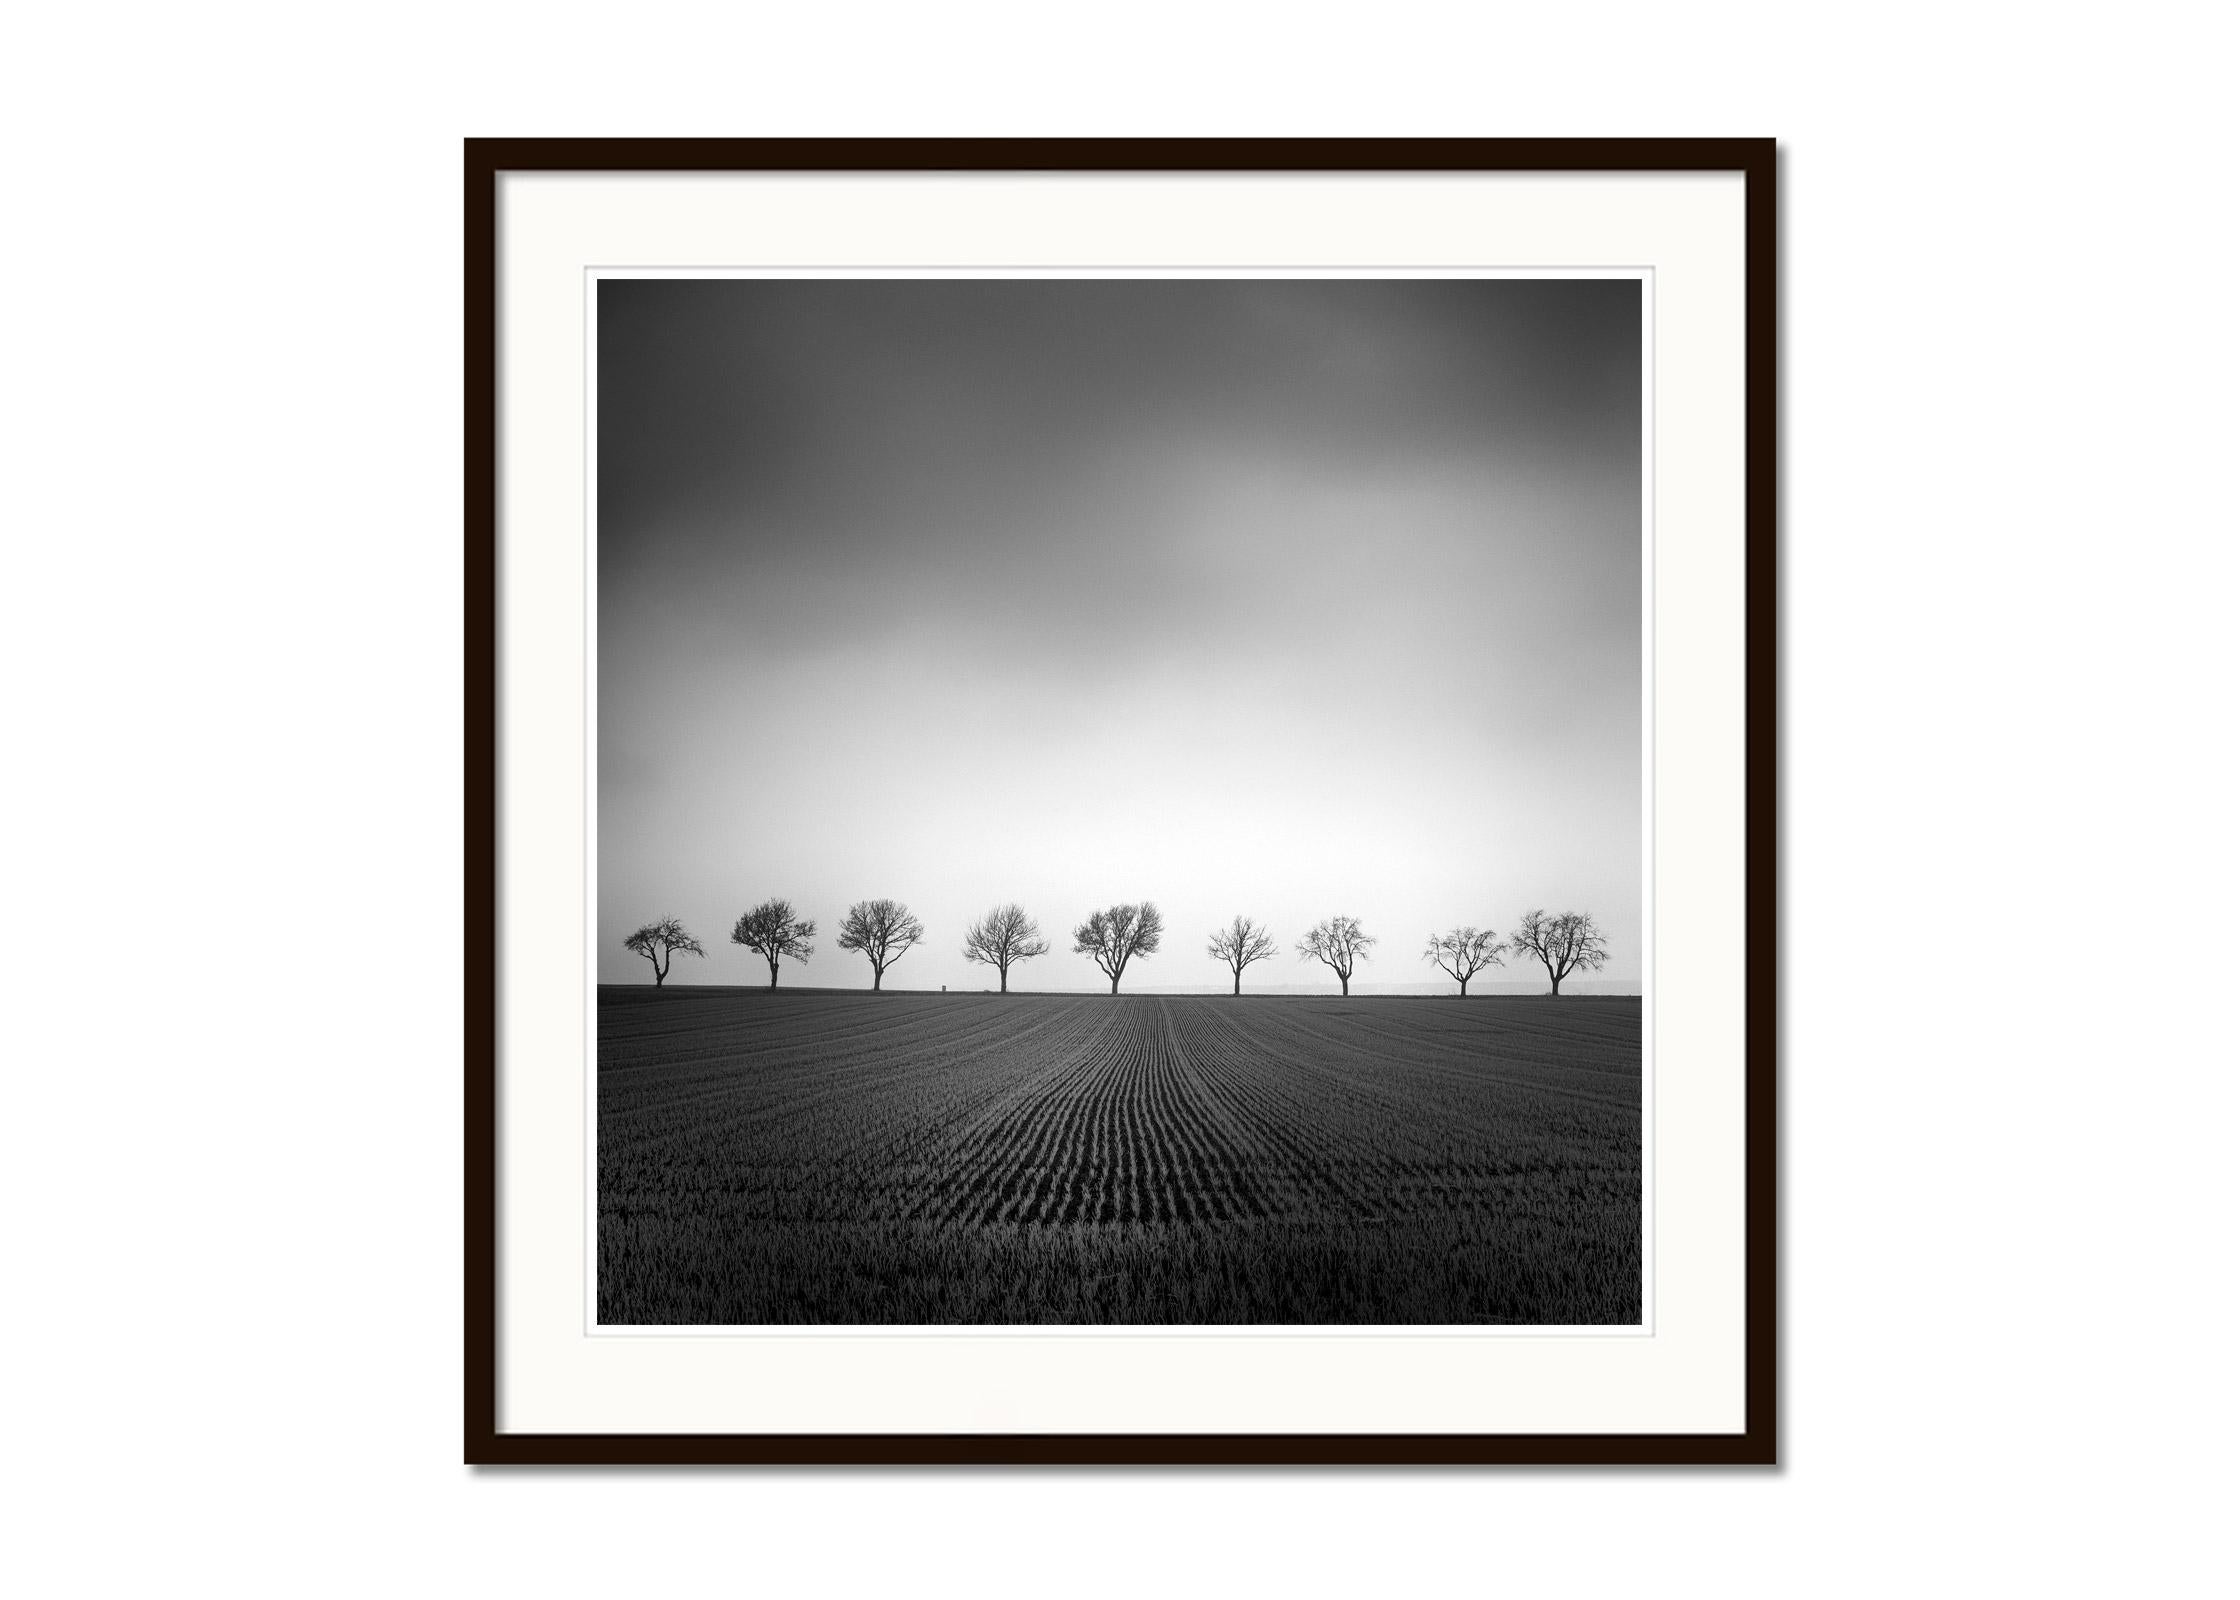 Nine Cherry Trees Corn Field black & white fine art landscape photography print - Black Landscape Photograph by Gerald Berghammer